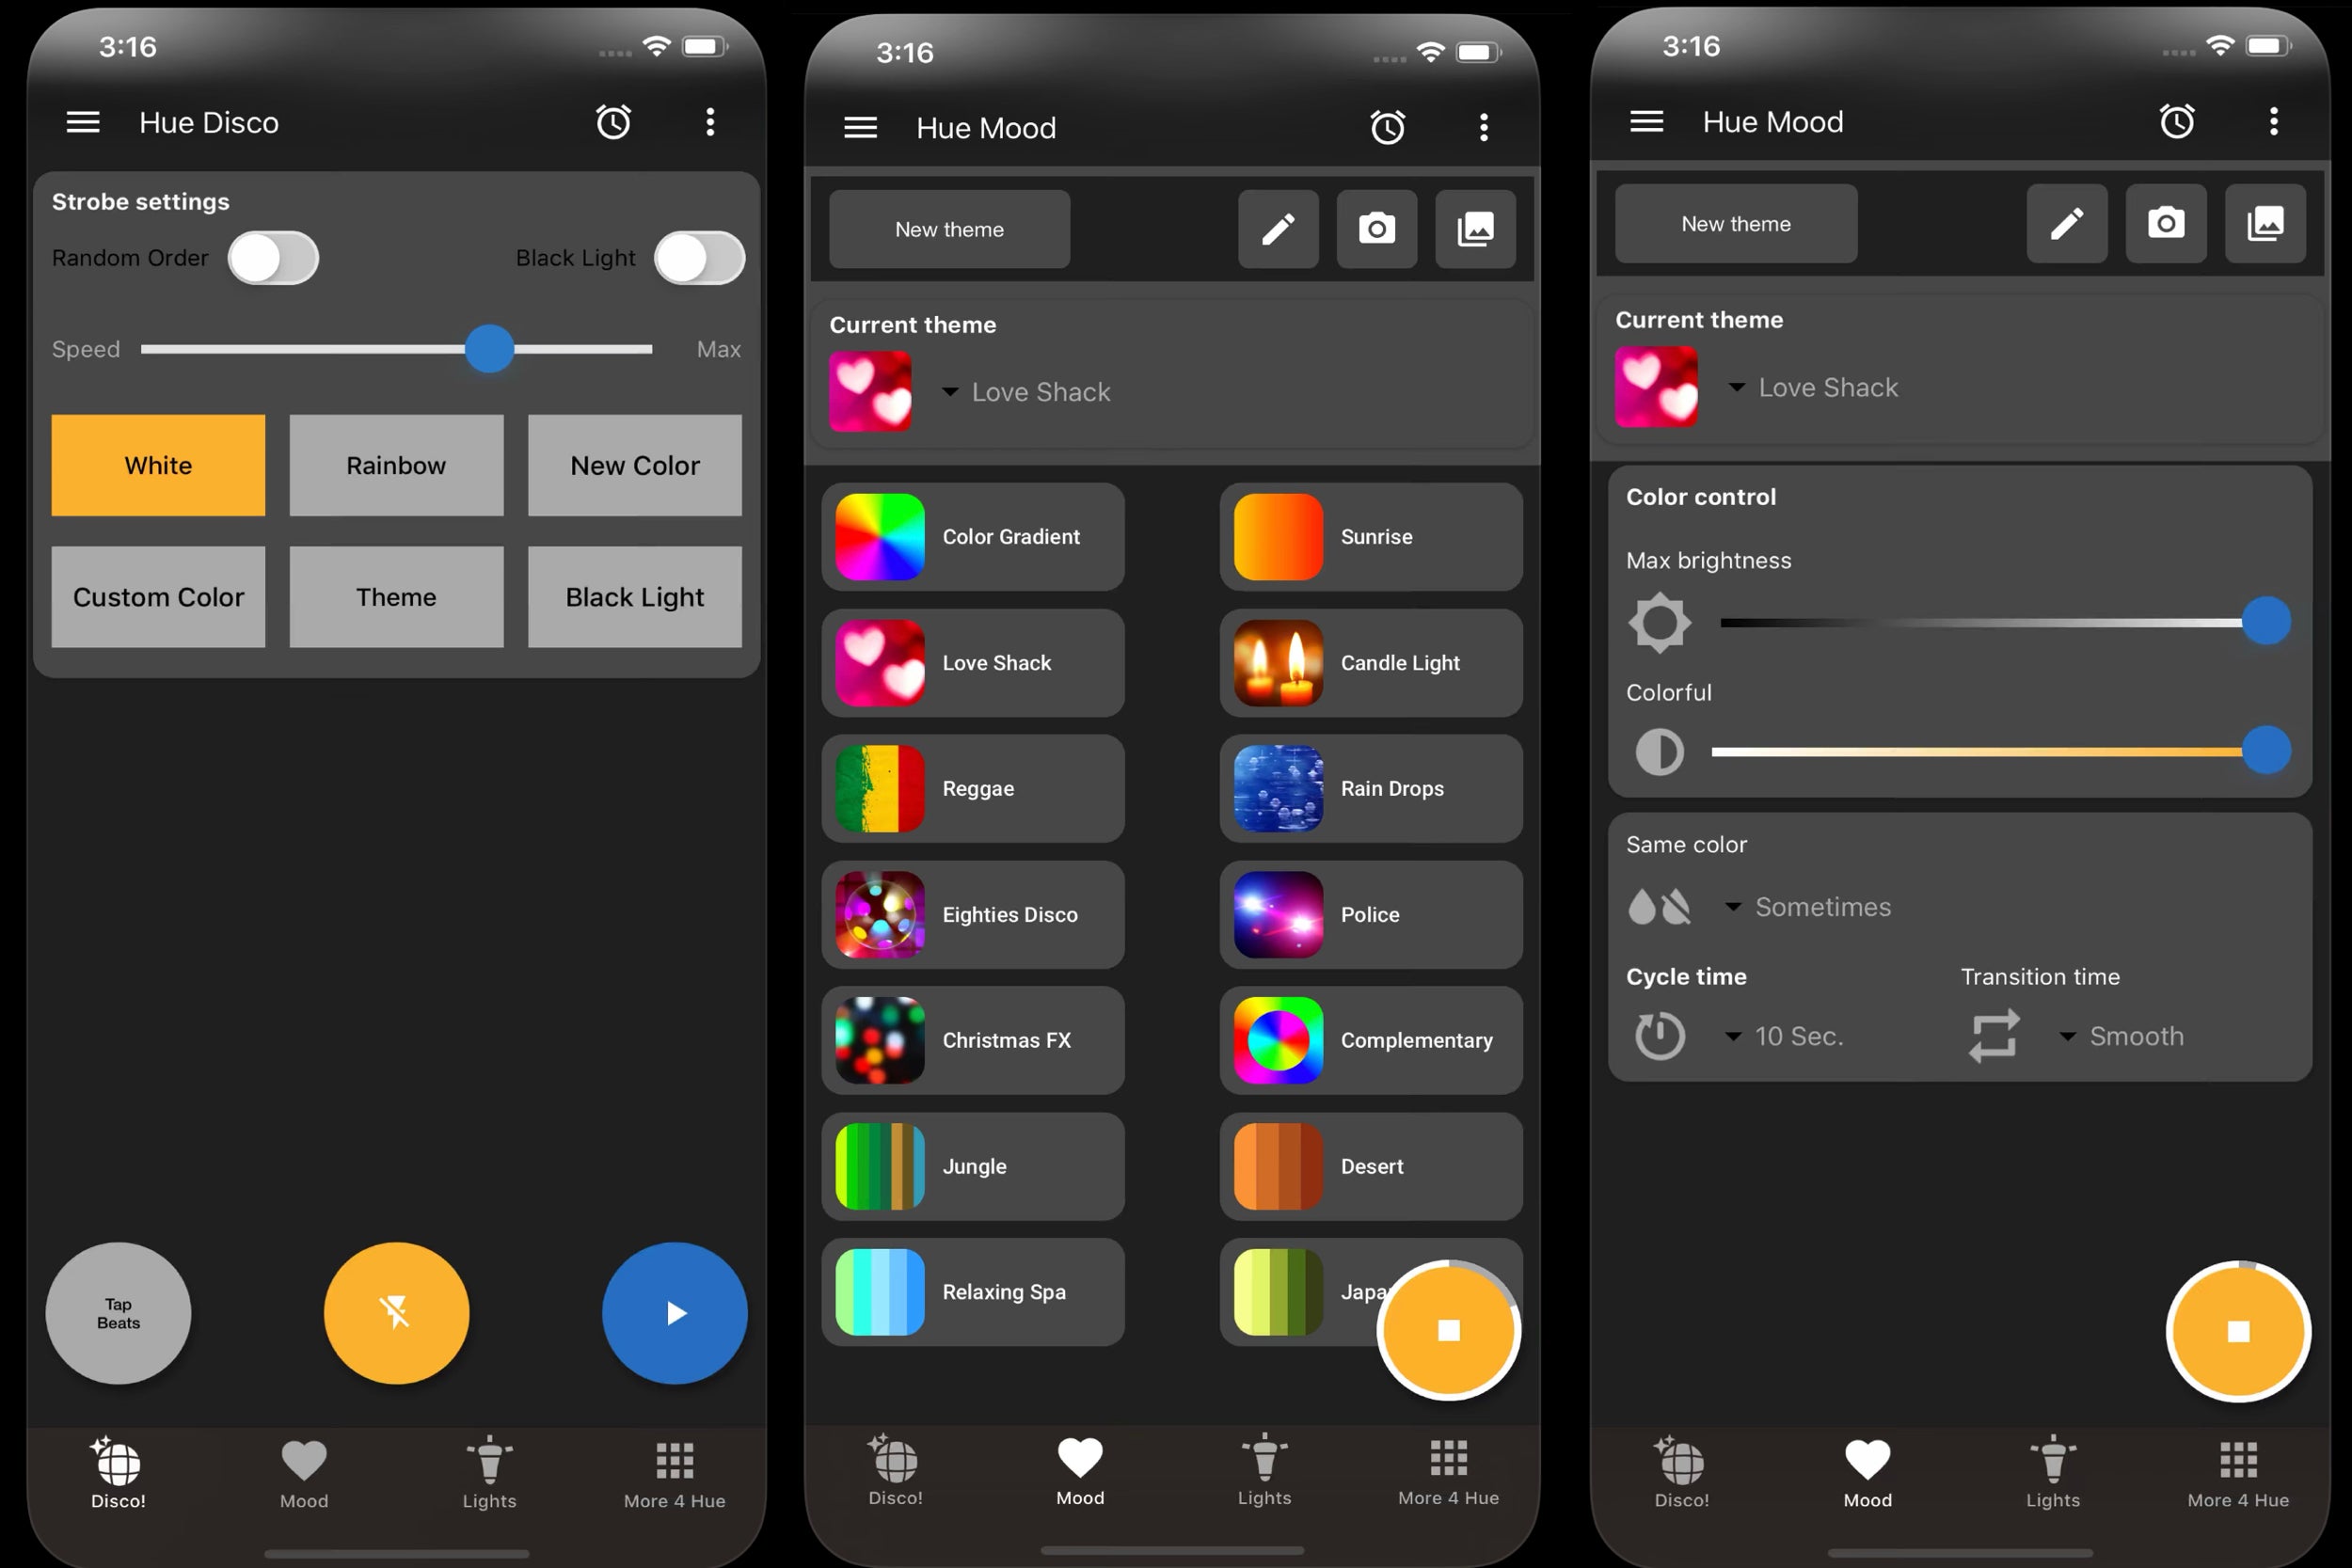 HueDisco is one of the Philips Hue appsThree smartphones displaying Hue Disco settings screen and Hue Mood settings screen